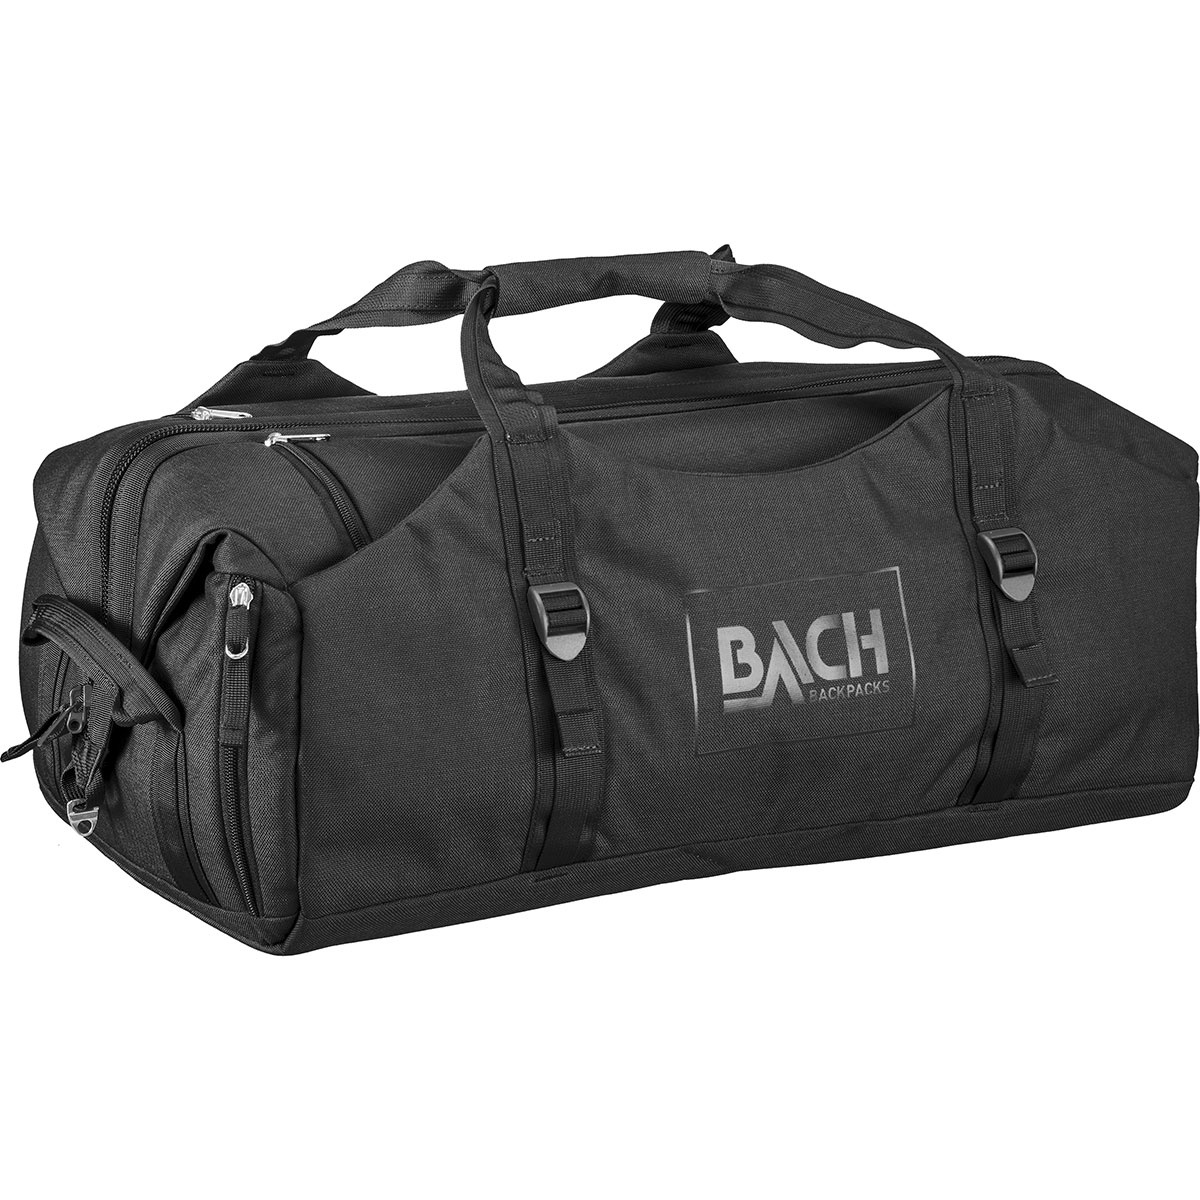 Image of Bach Equipment Borsa da viaggio Dr Duffel 40